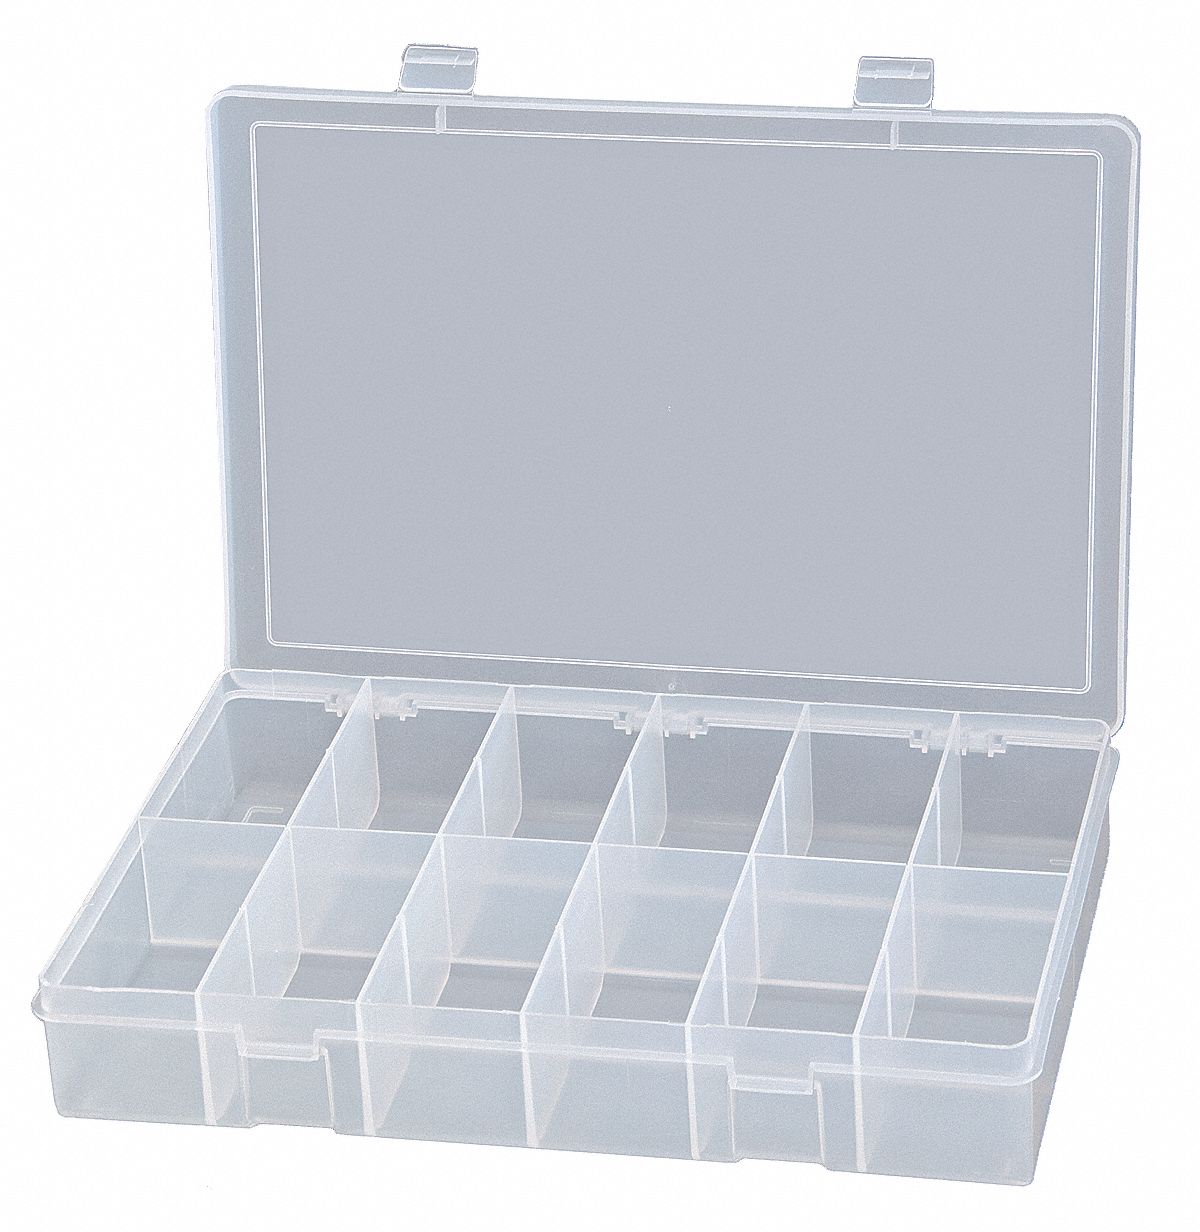 15V207 - Compartment Box 12 Compartments Clear